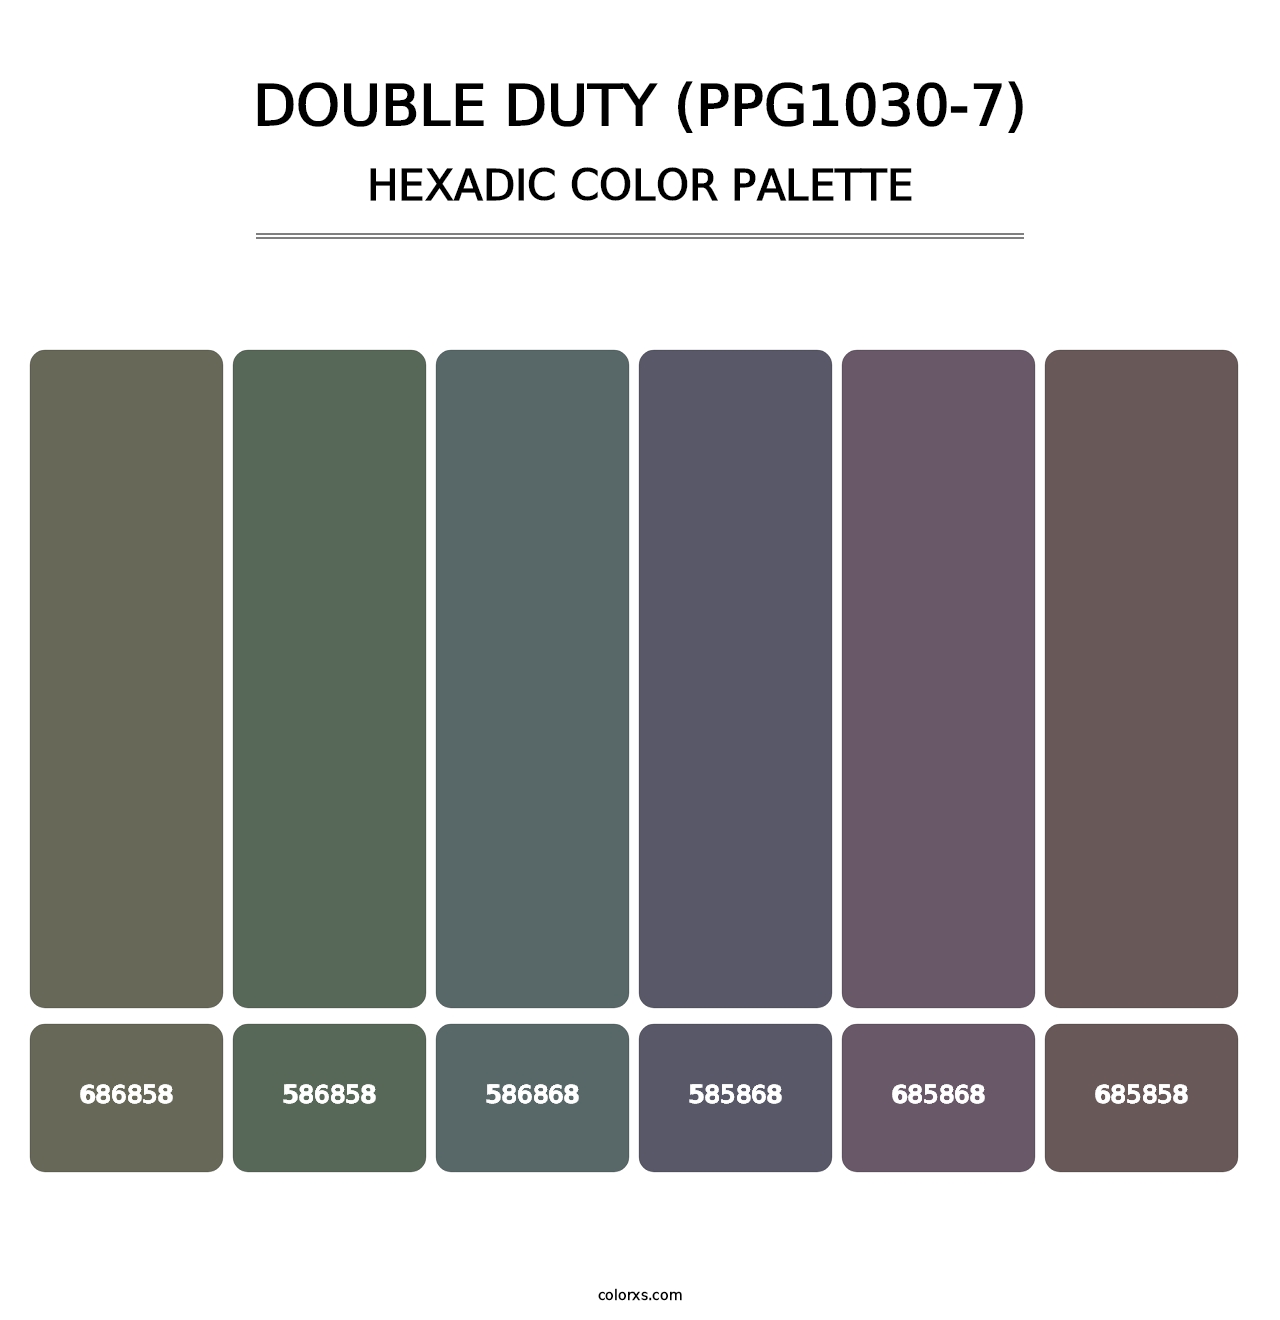 Double Duty (PPG1030-7) - Hexadic Color Palette